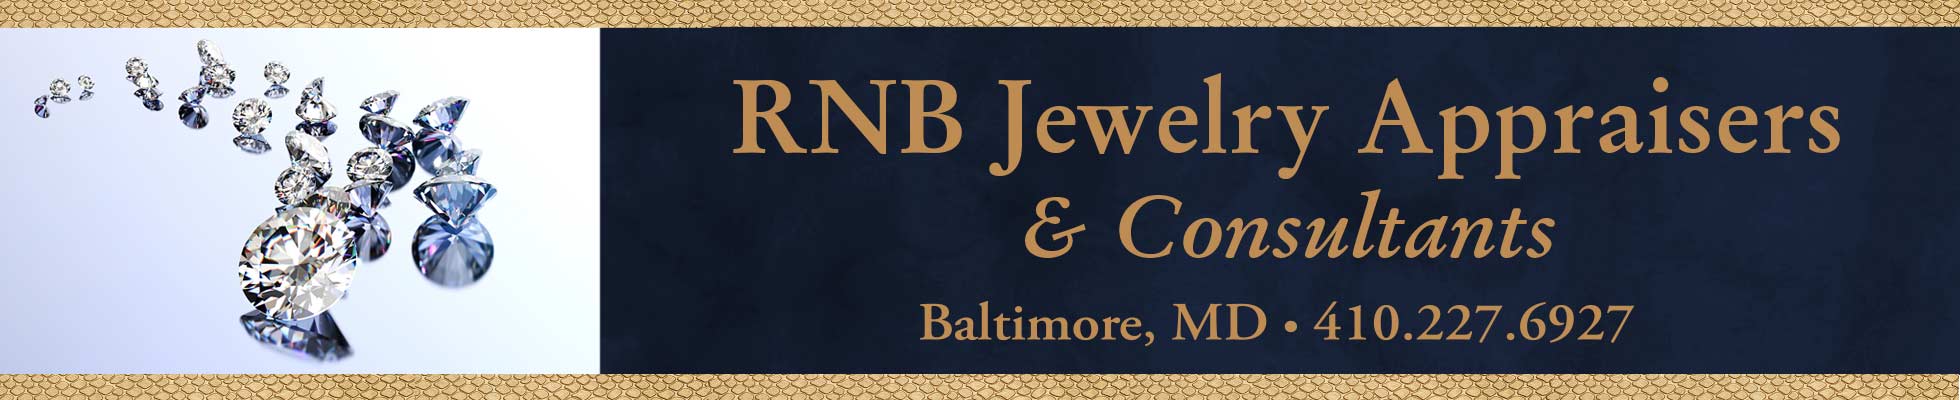 RNB Jewelry Appraisal, Baltimore, MD Gemologist